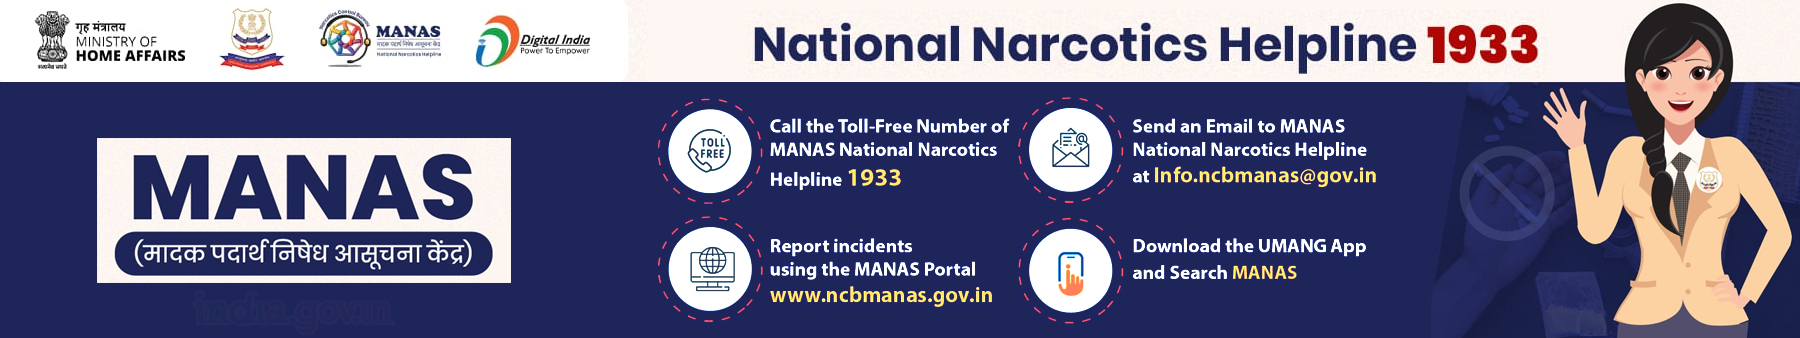 MANAS - National Narcotics Helpline